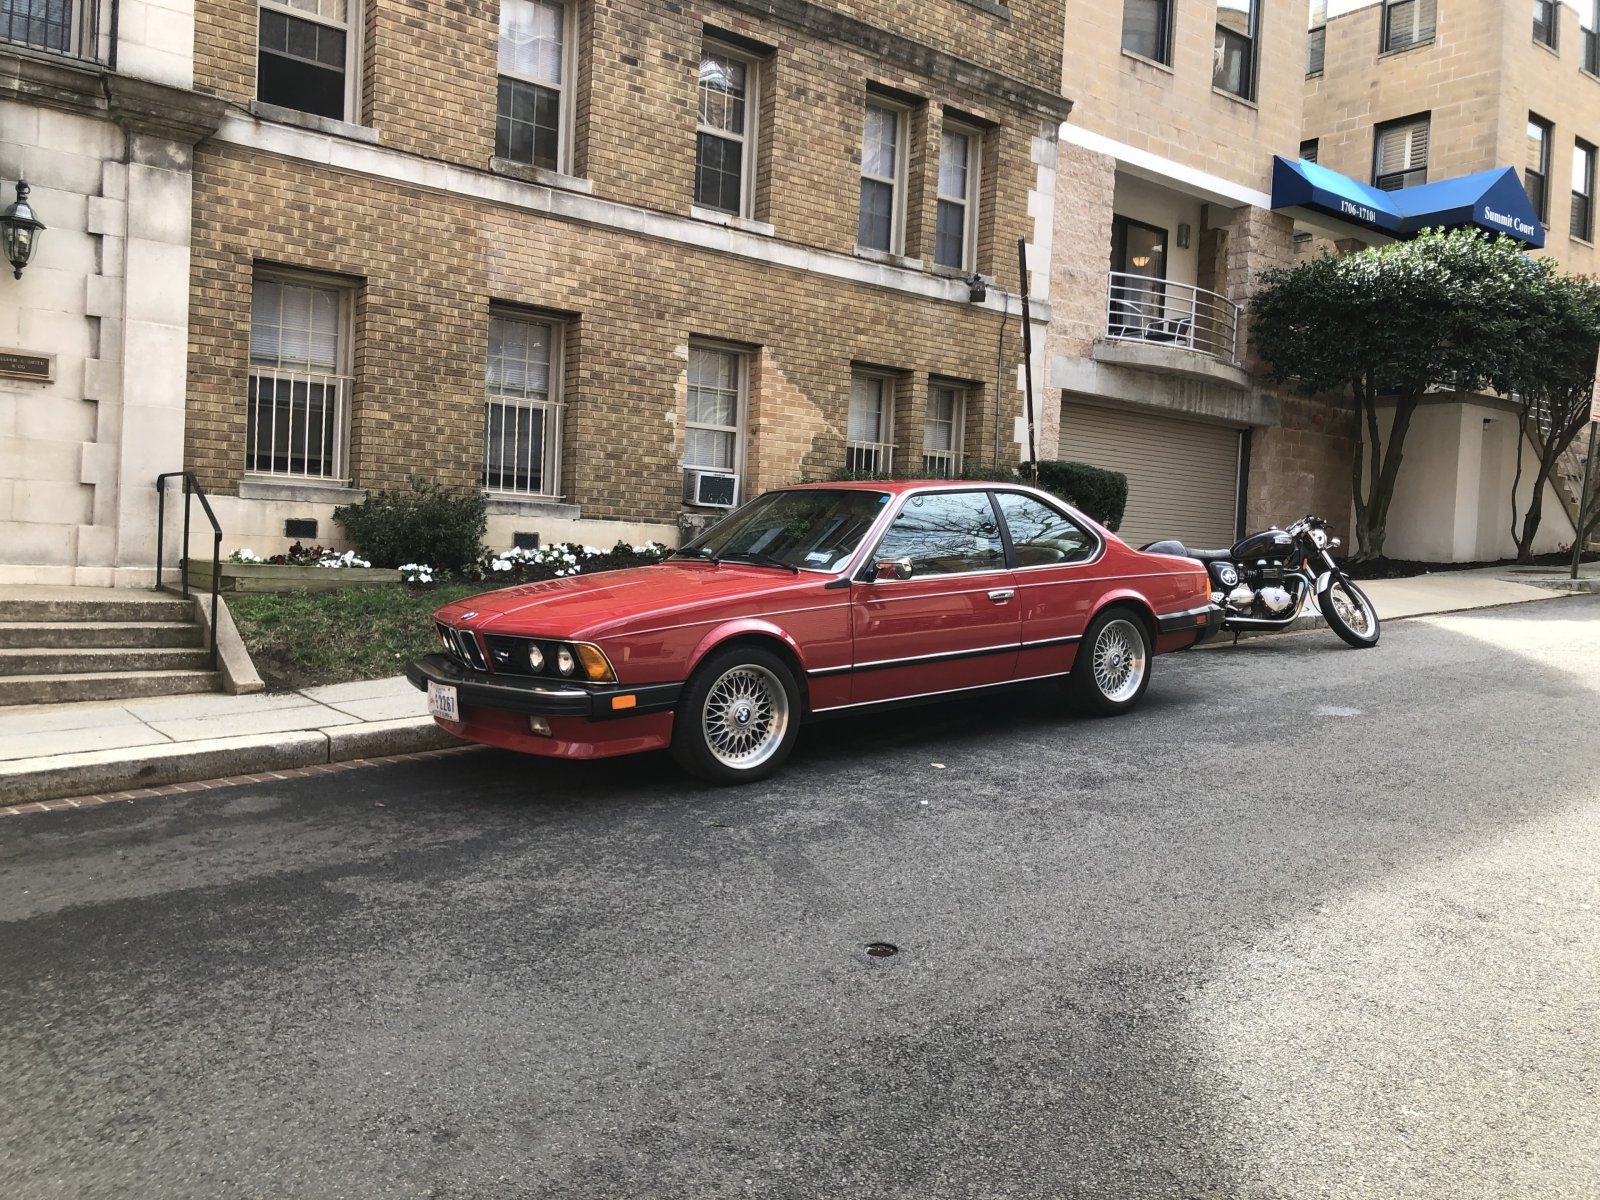 1985 BMW 635CSi